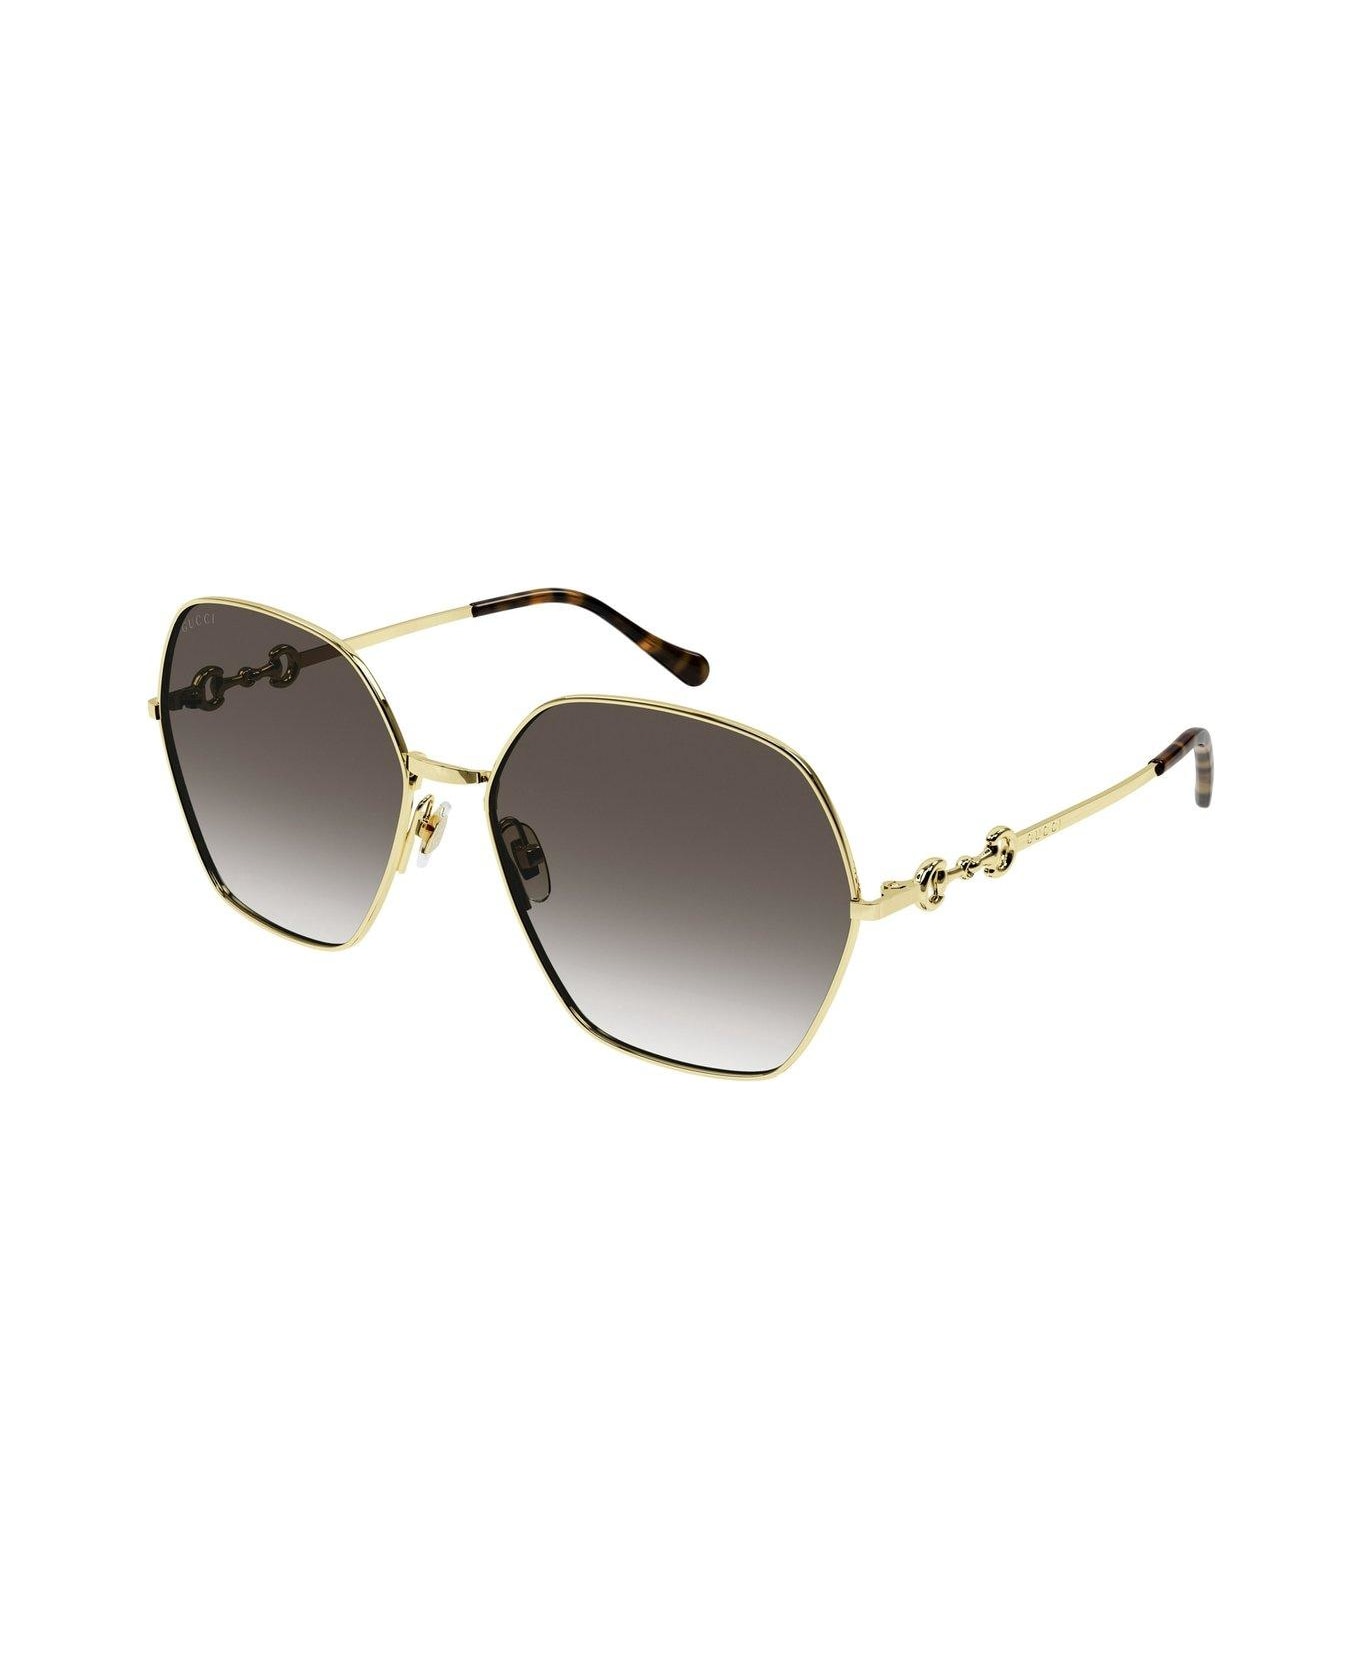 Gucci Eyewear Round Frame Sunglasses Sunglasses - 002 GOLD GOLD BROWN